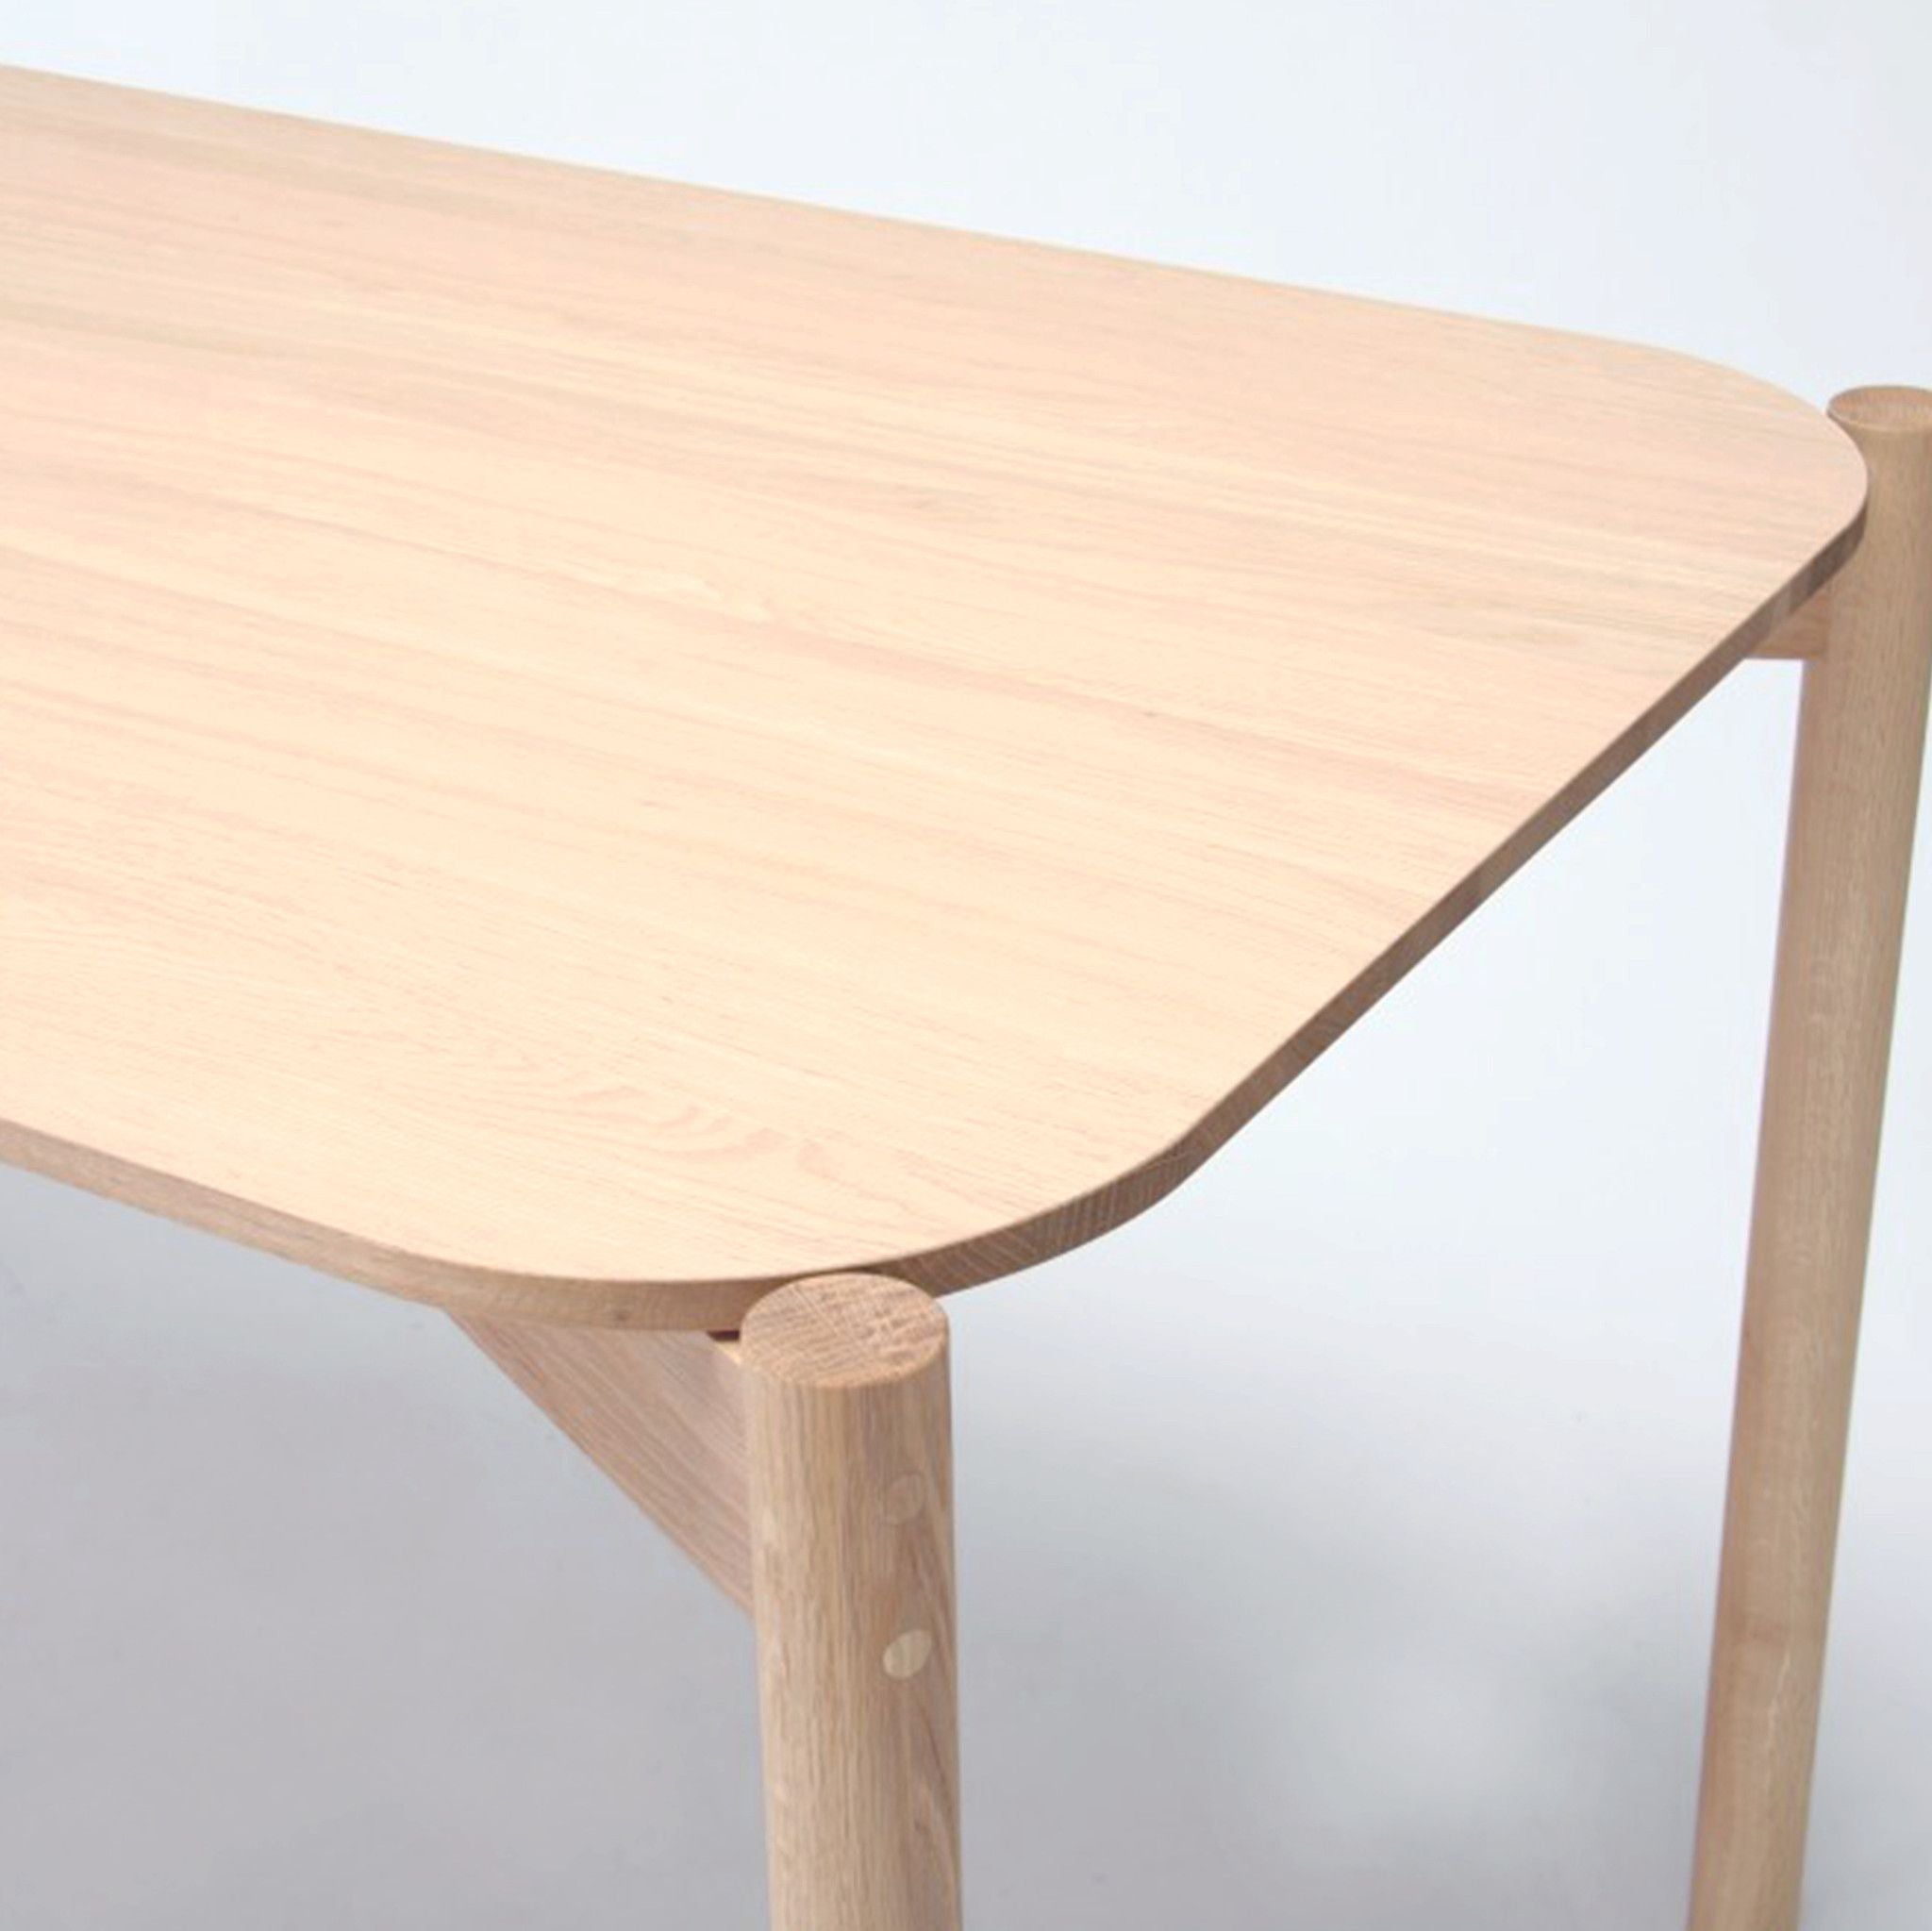 Karimoku New Standard - CASTOR TABLE L - Dining Table 